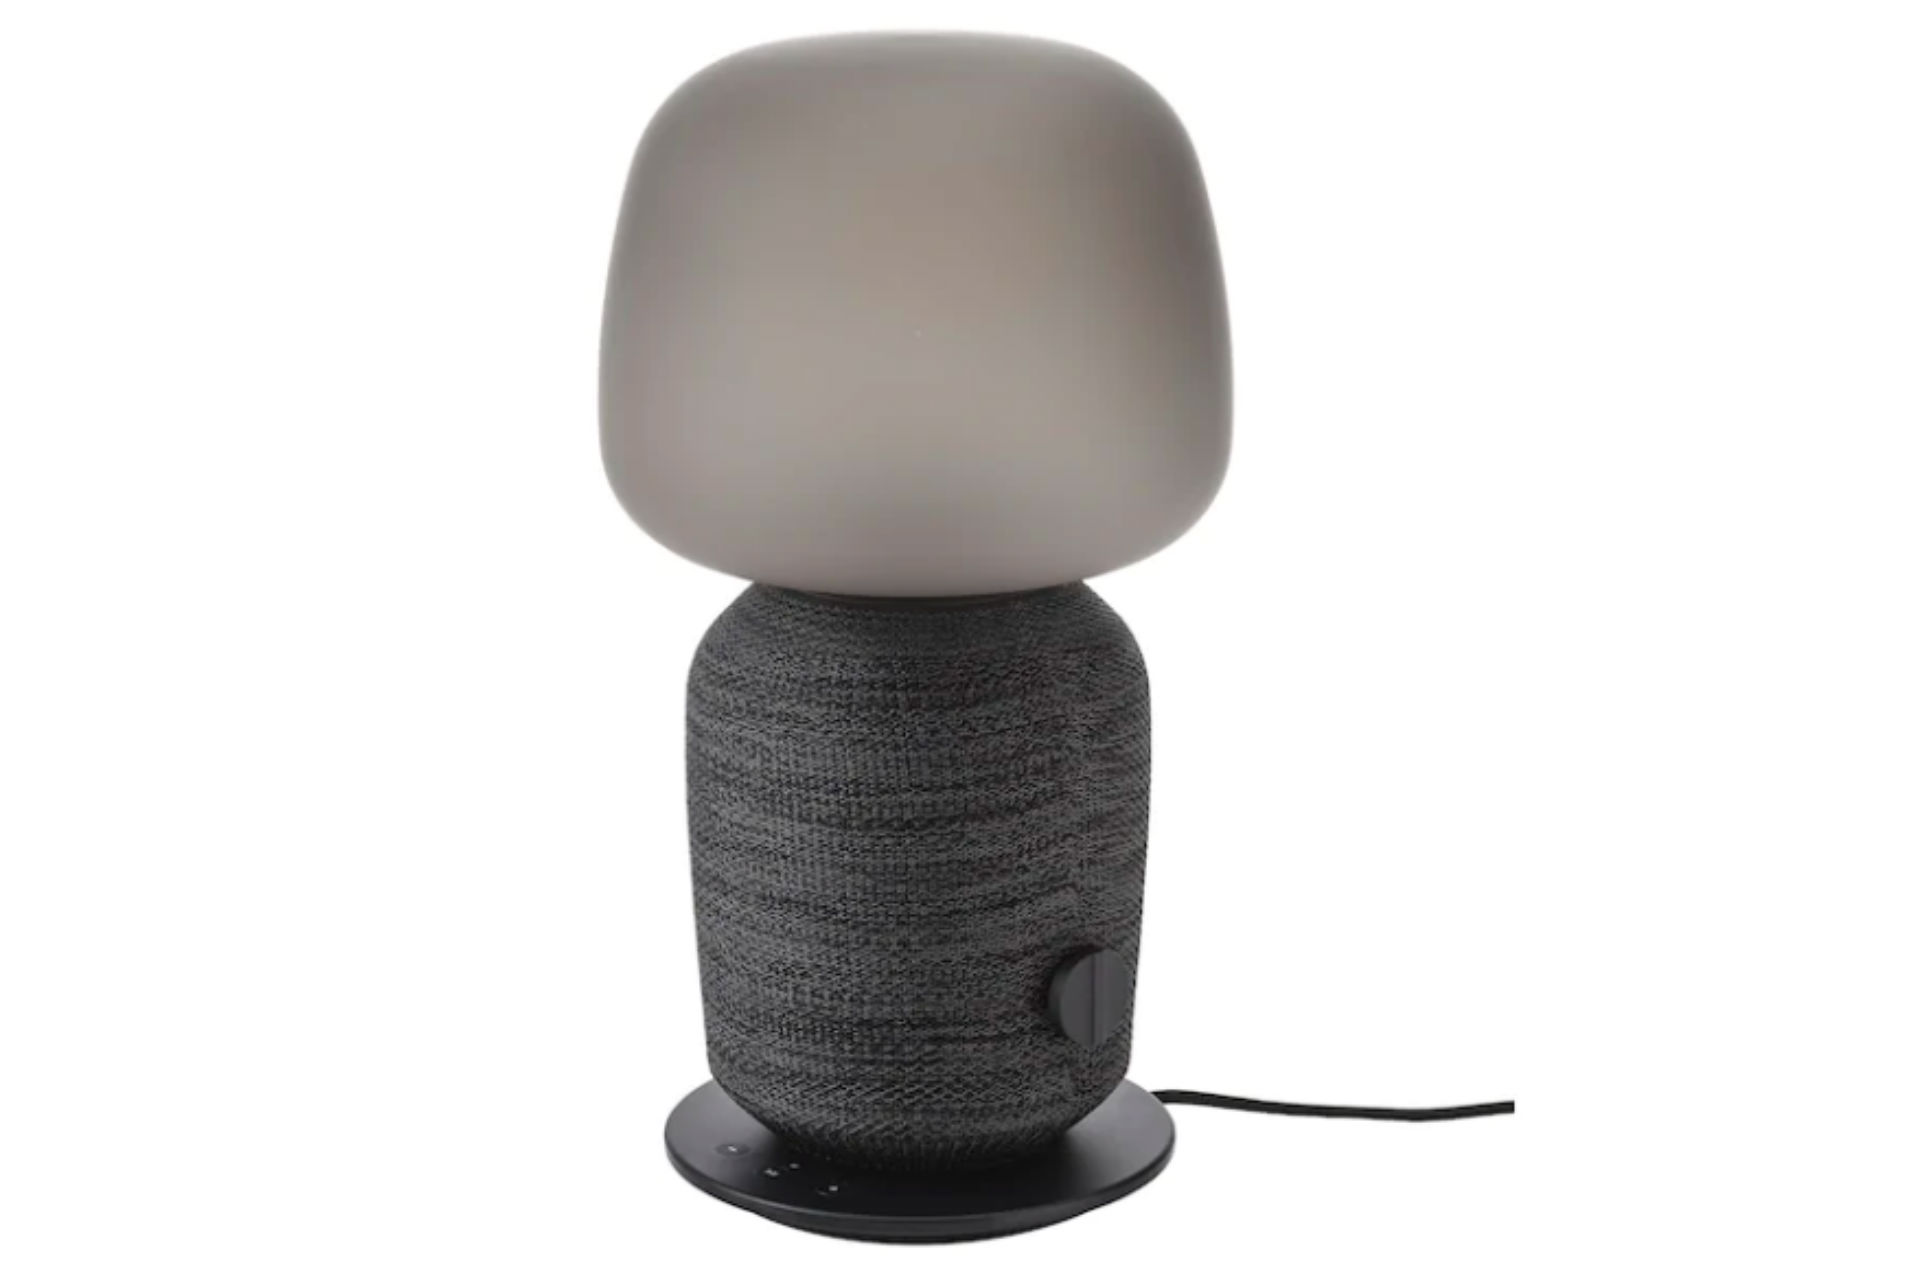 Symfonisk table lamp with WIFI speaker